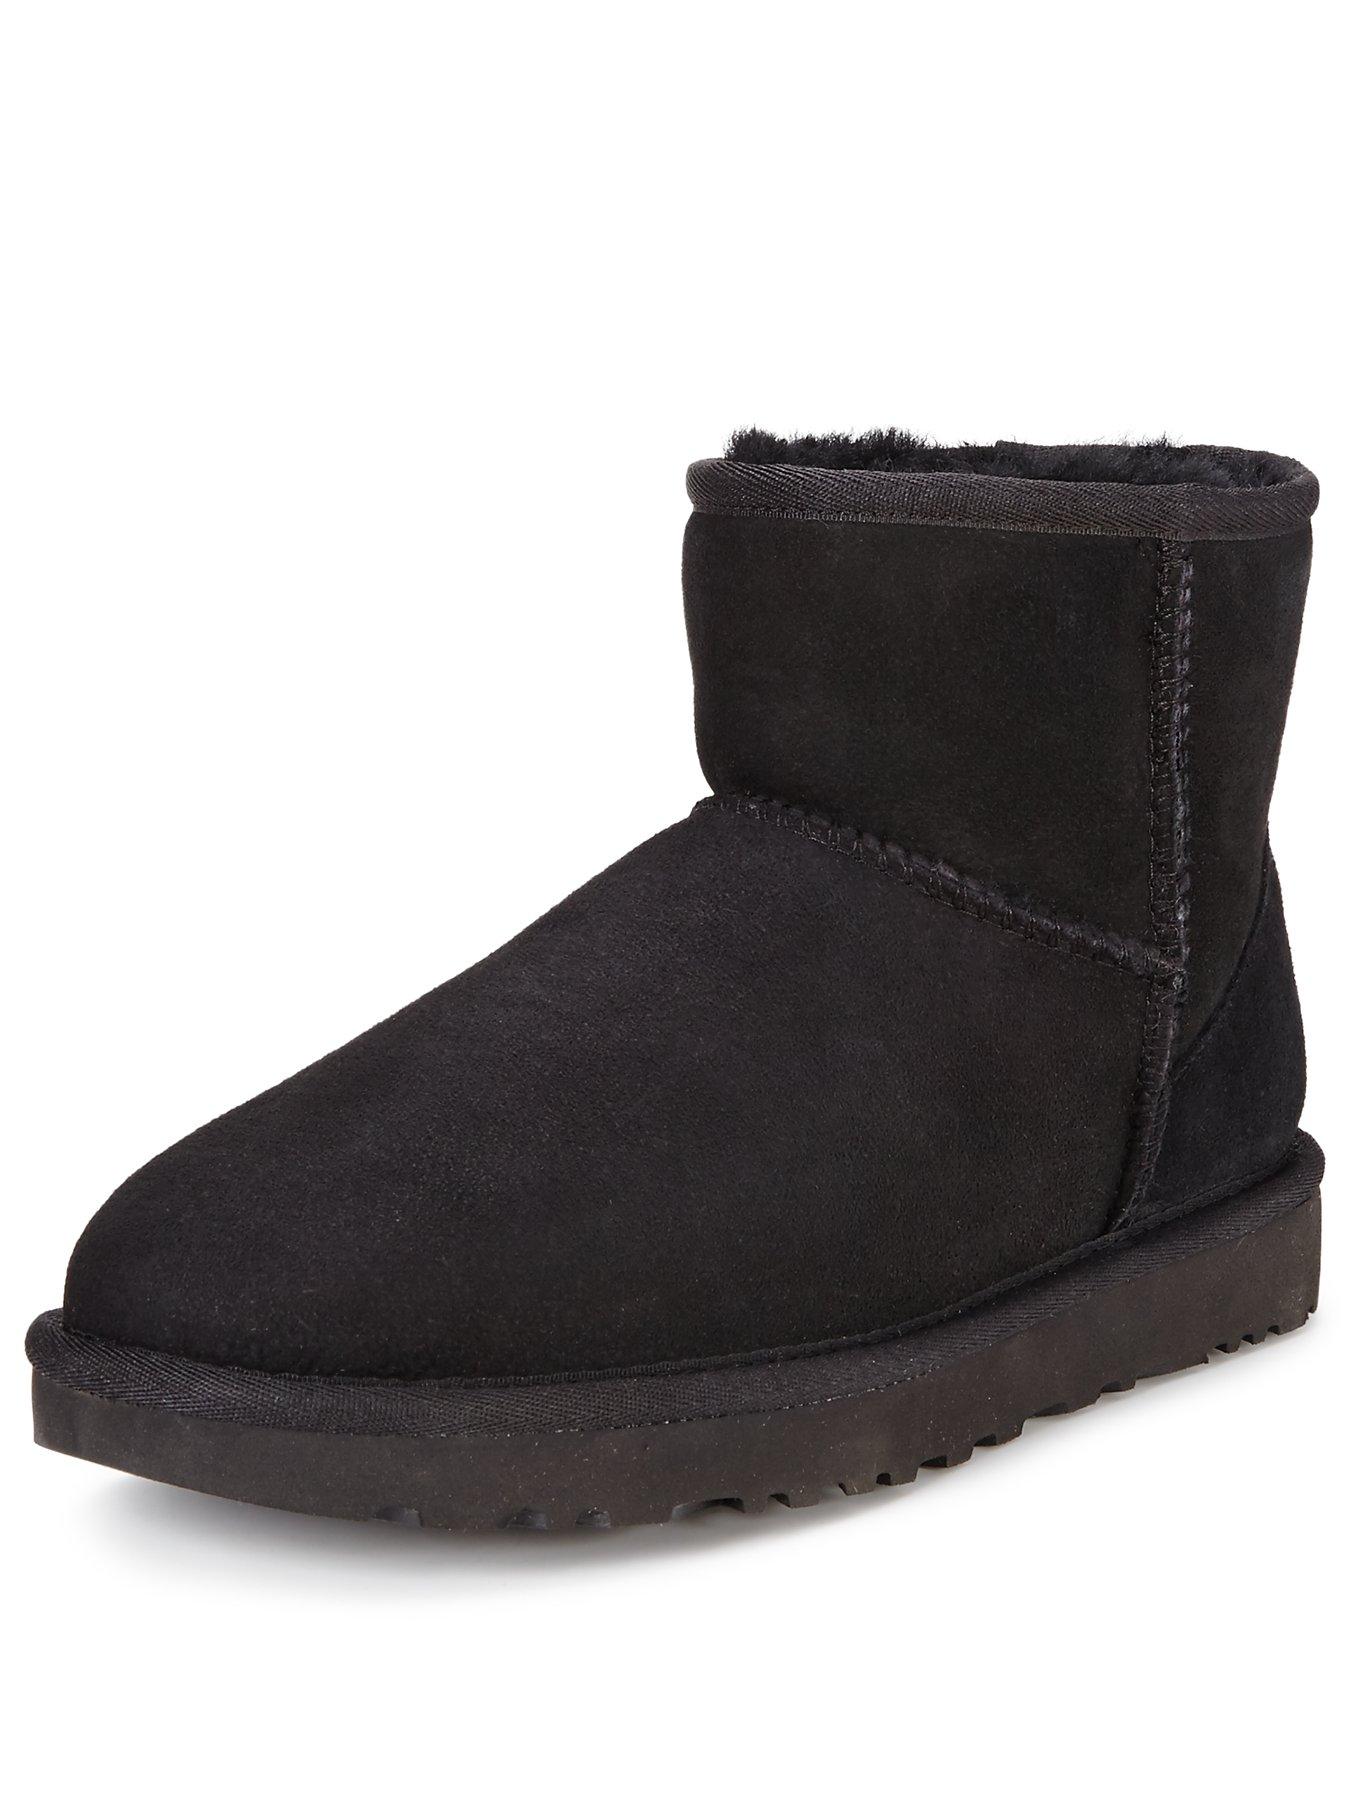 Shoes & boots Classic II Mini Boot - Black/Stormy Grey